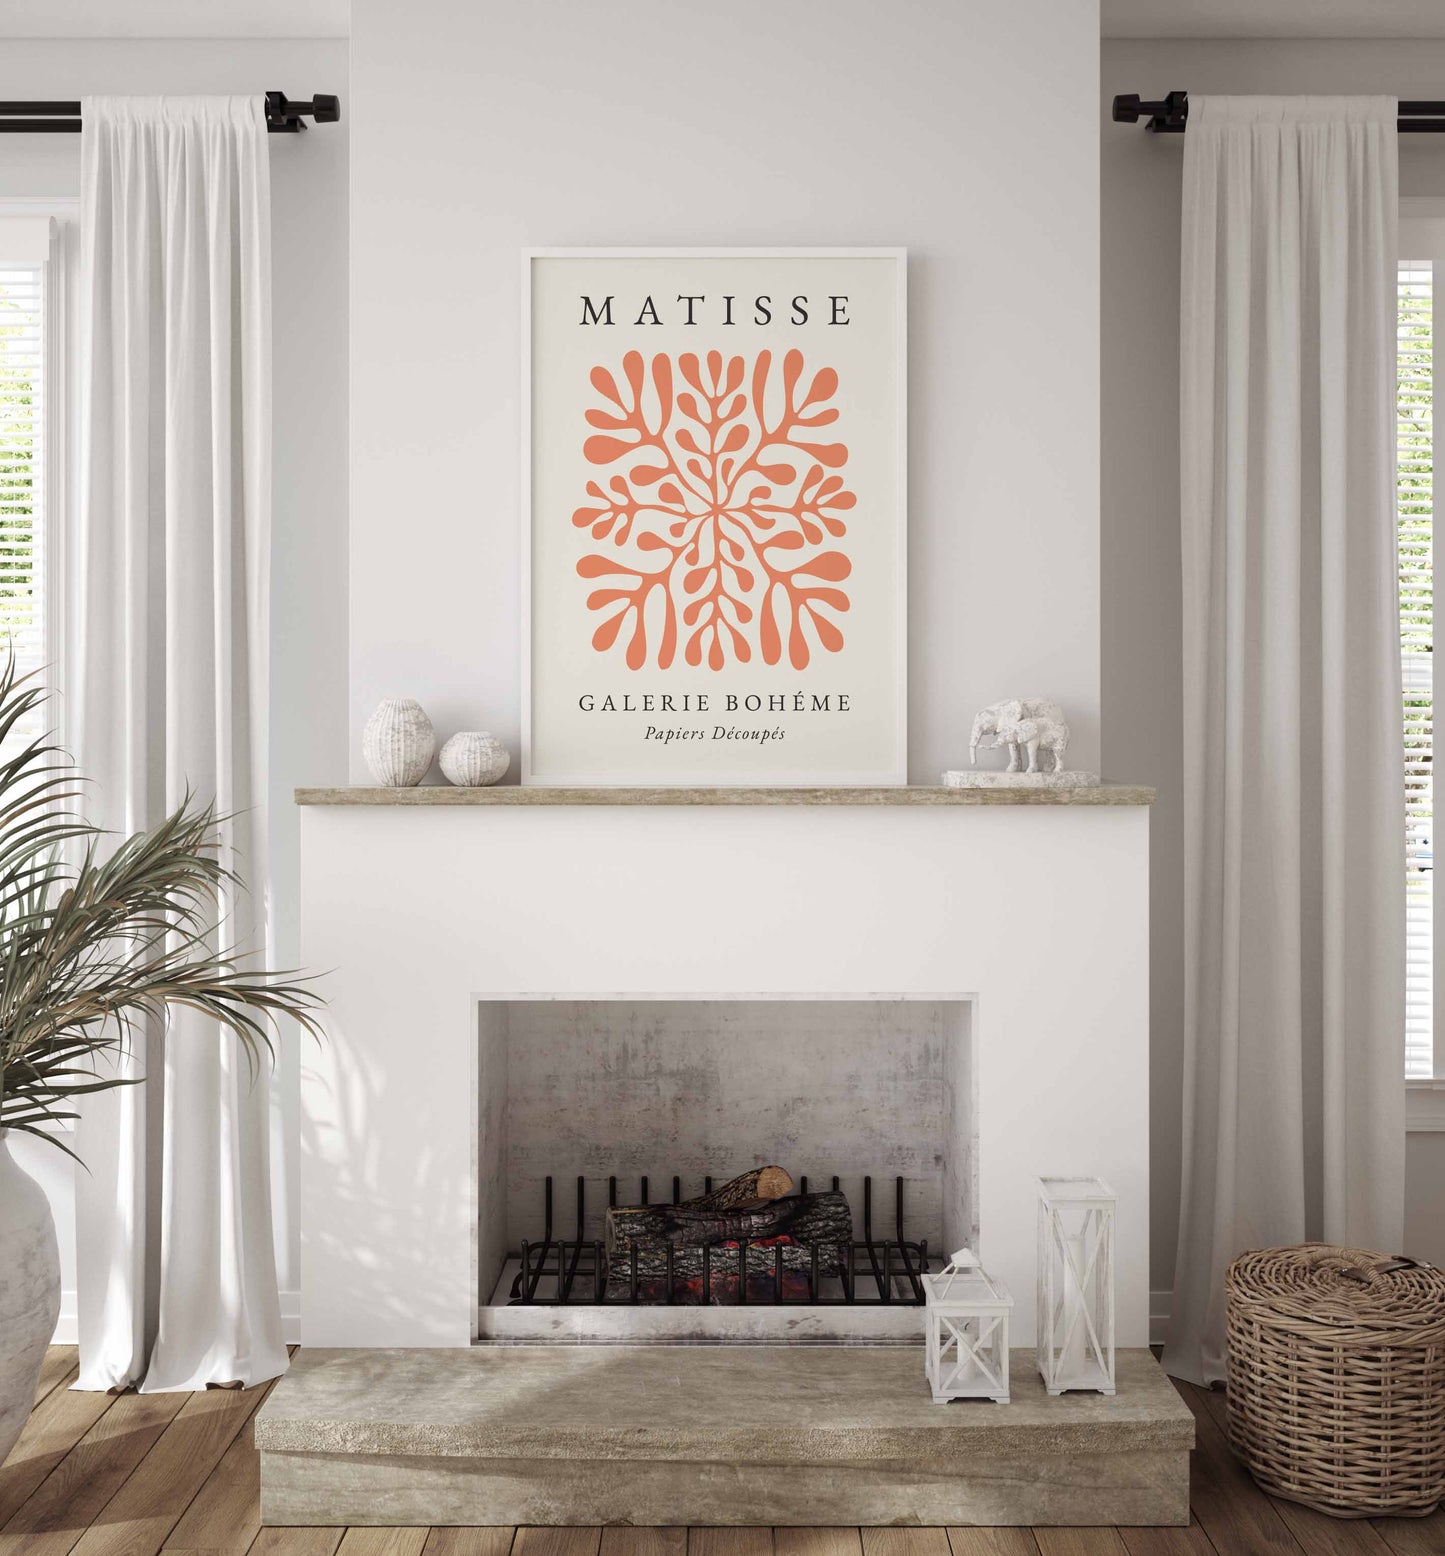 Orange Matisse poster with minimalist leaf design